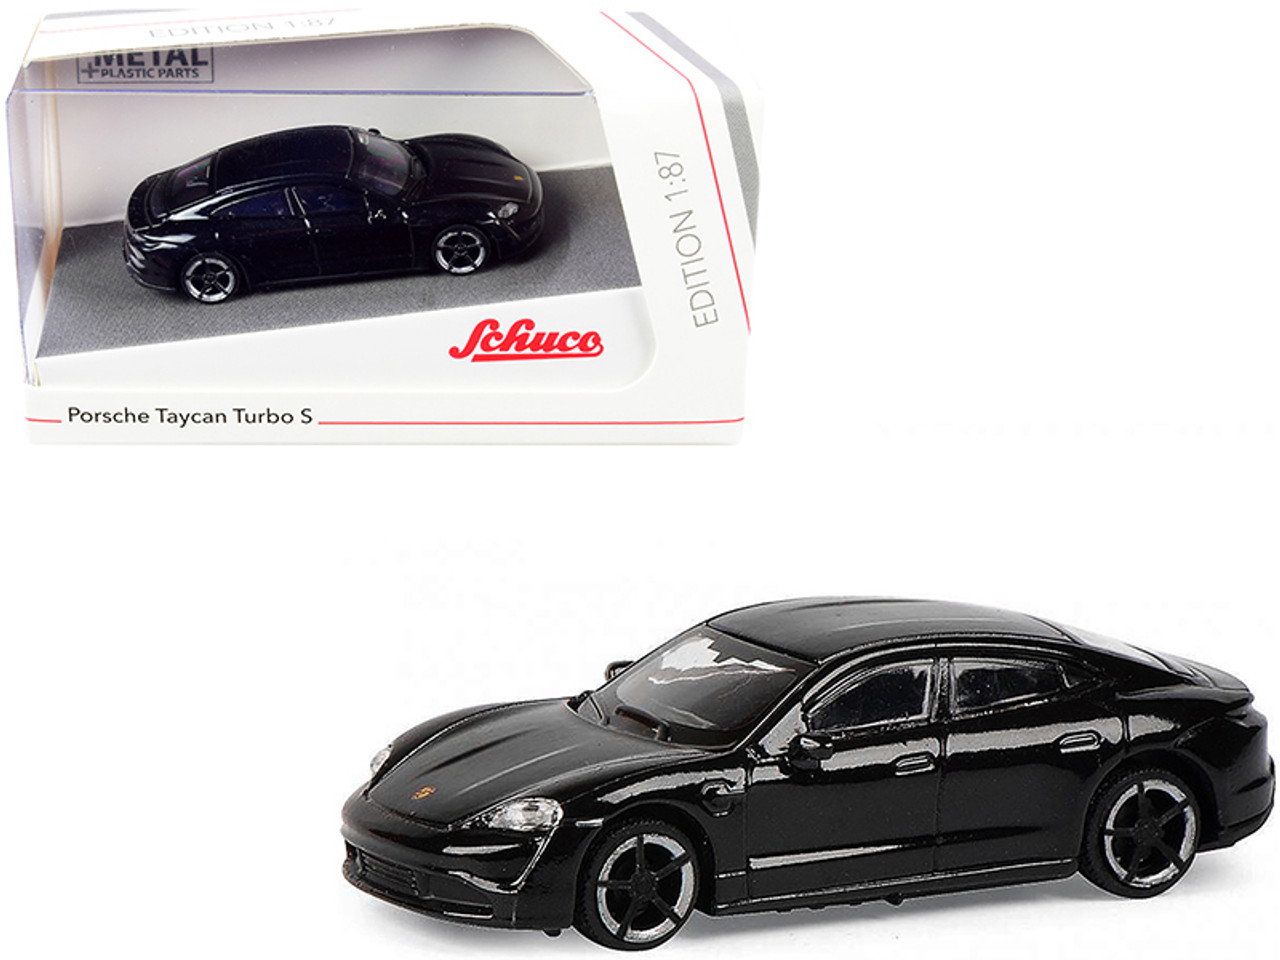 Porsche Taycan Turbo S Black 1/87 (HO) Diecast Model Car by Schuco